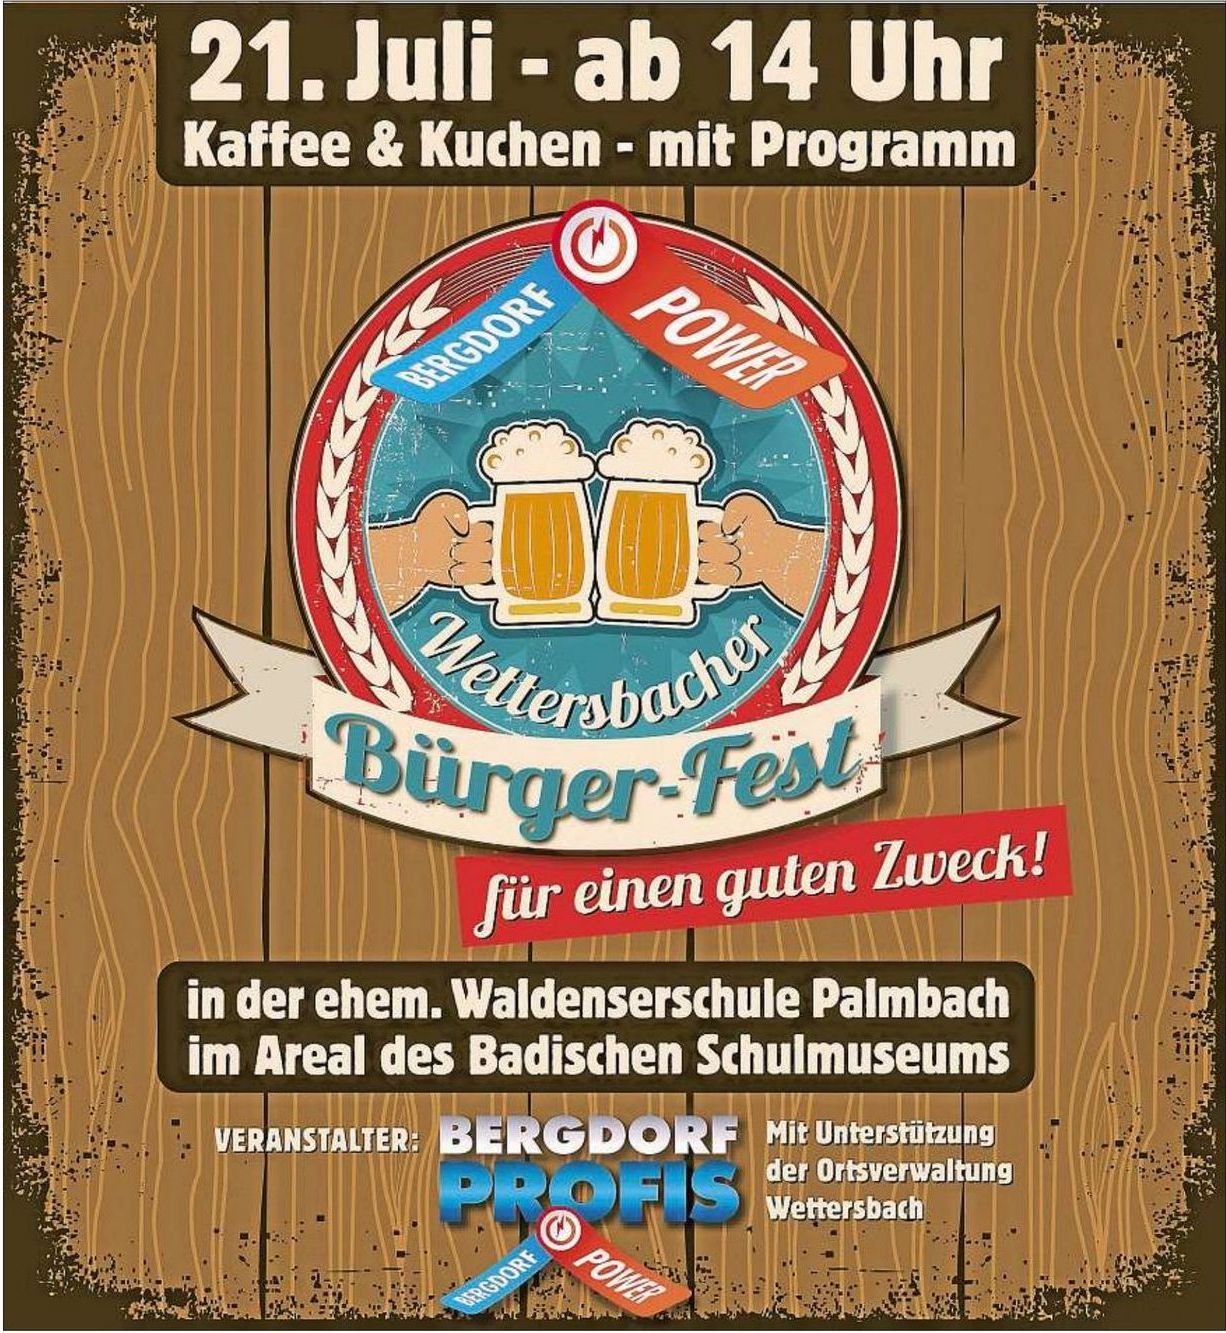 Wettersbacher Bürgergest 2017